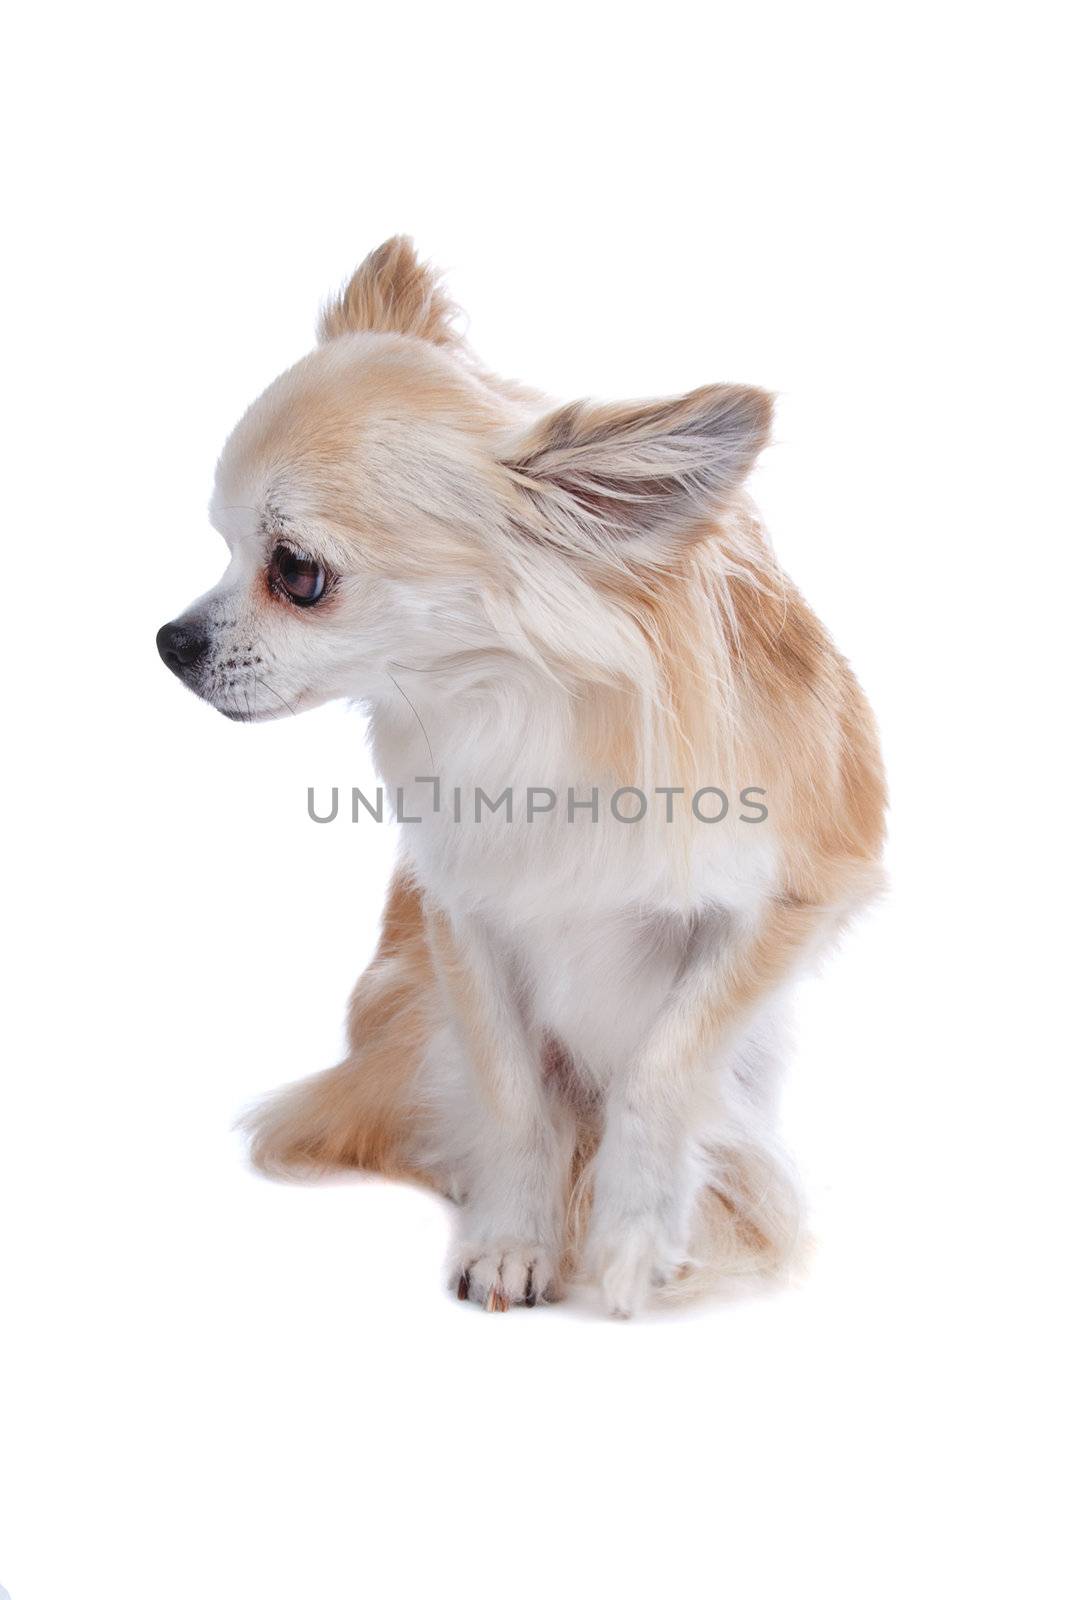 Cute Chihuahua dog by eriklam